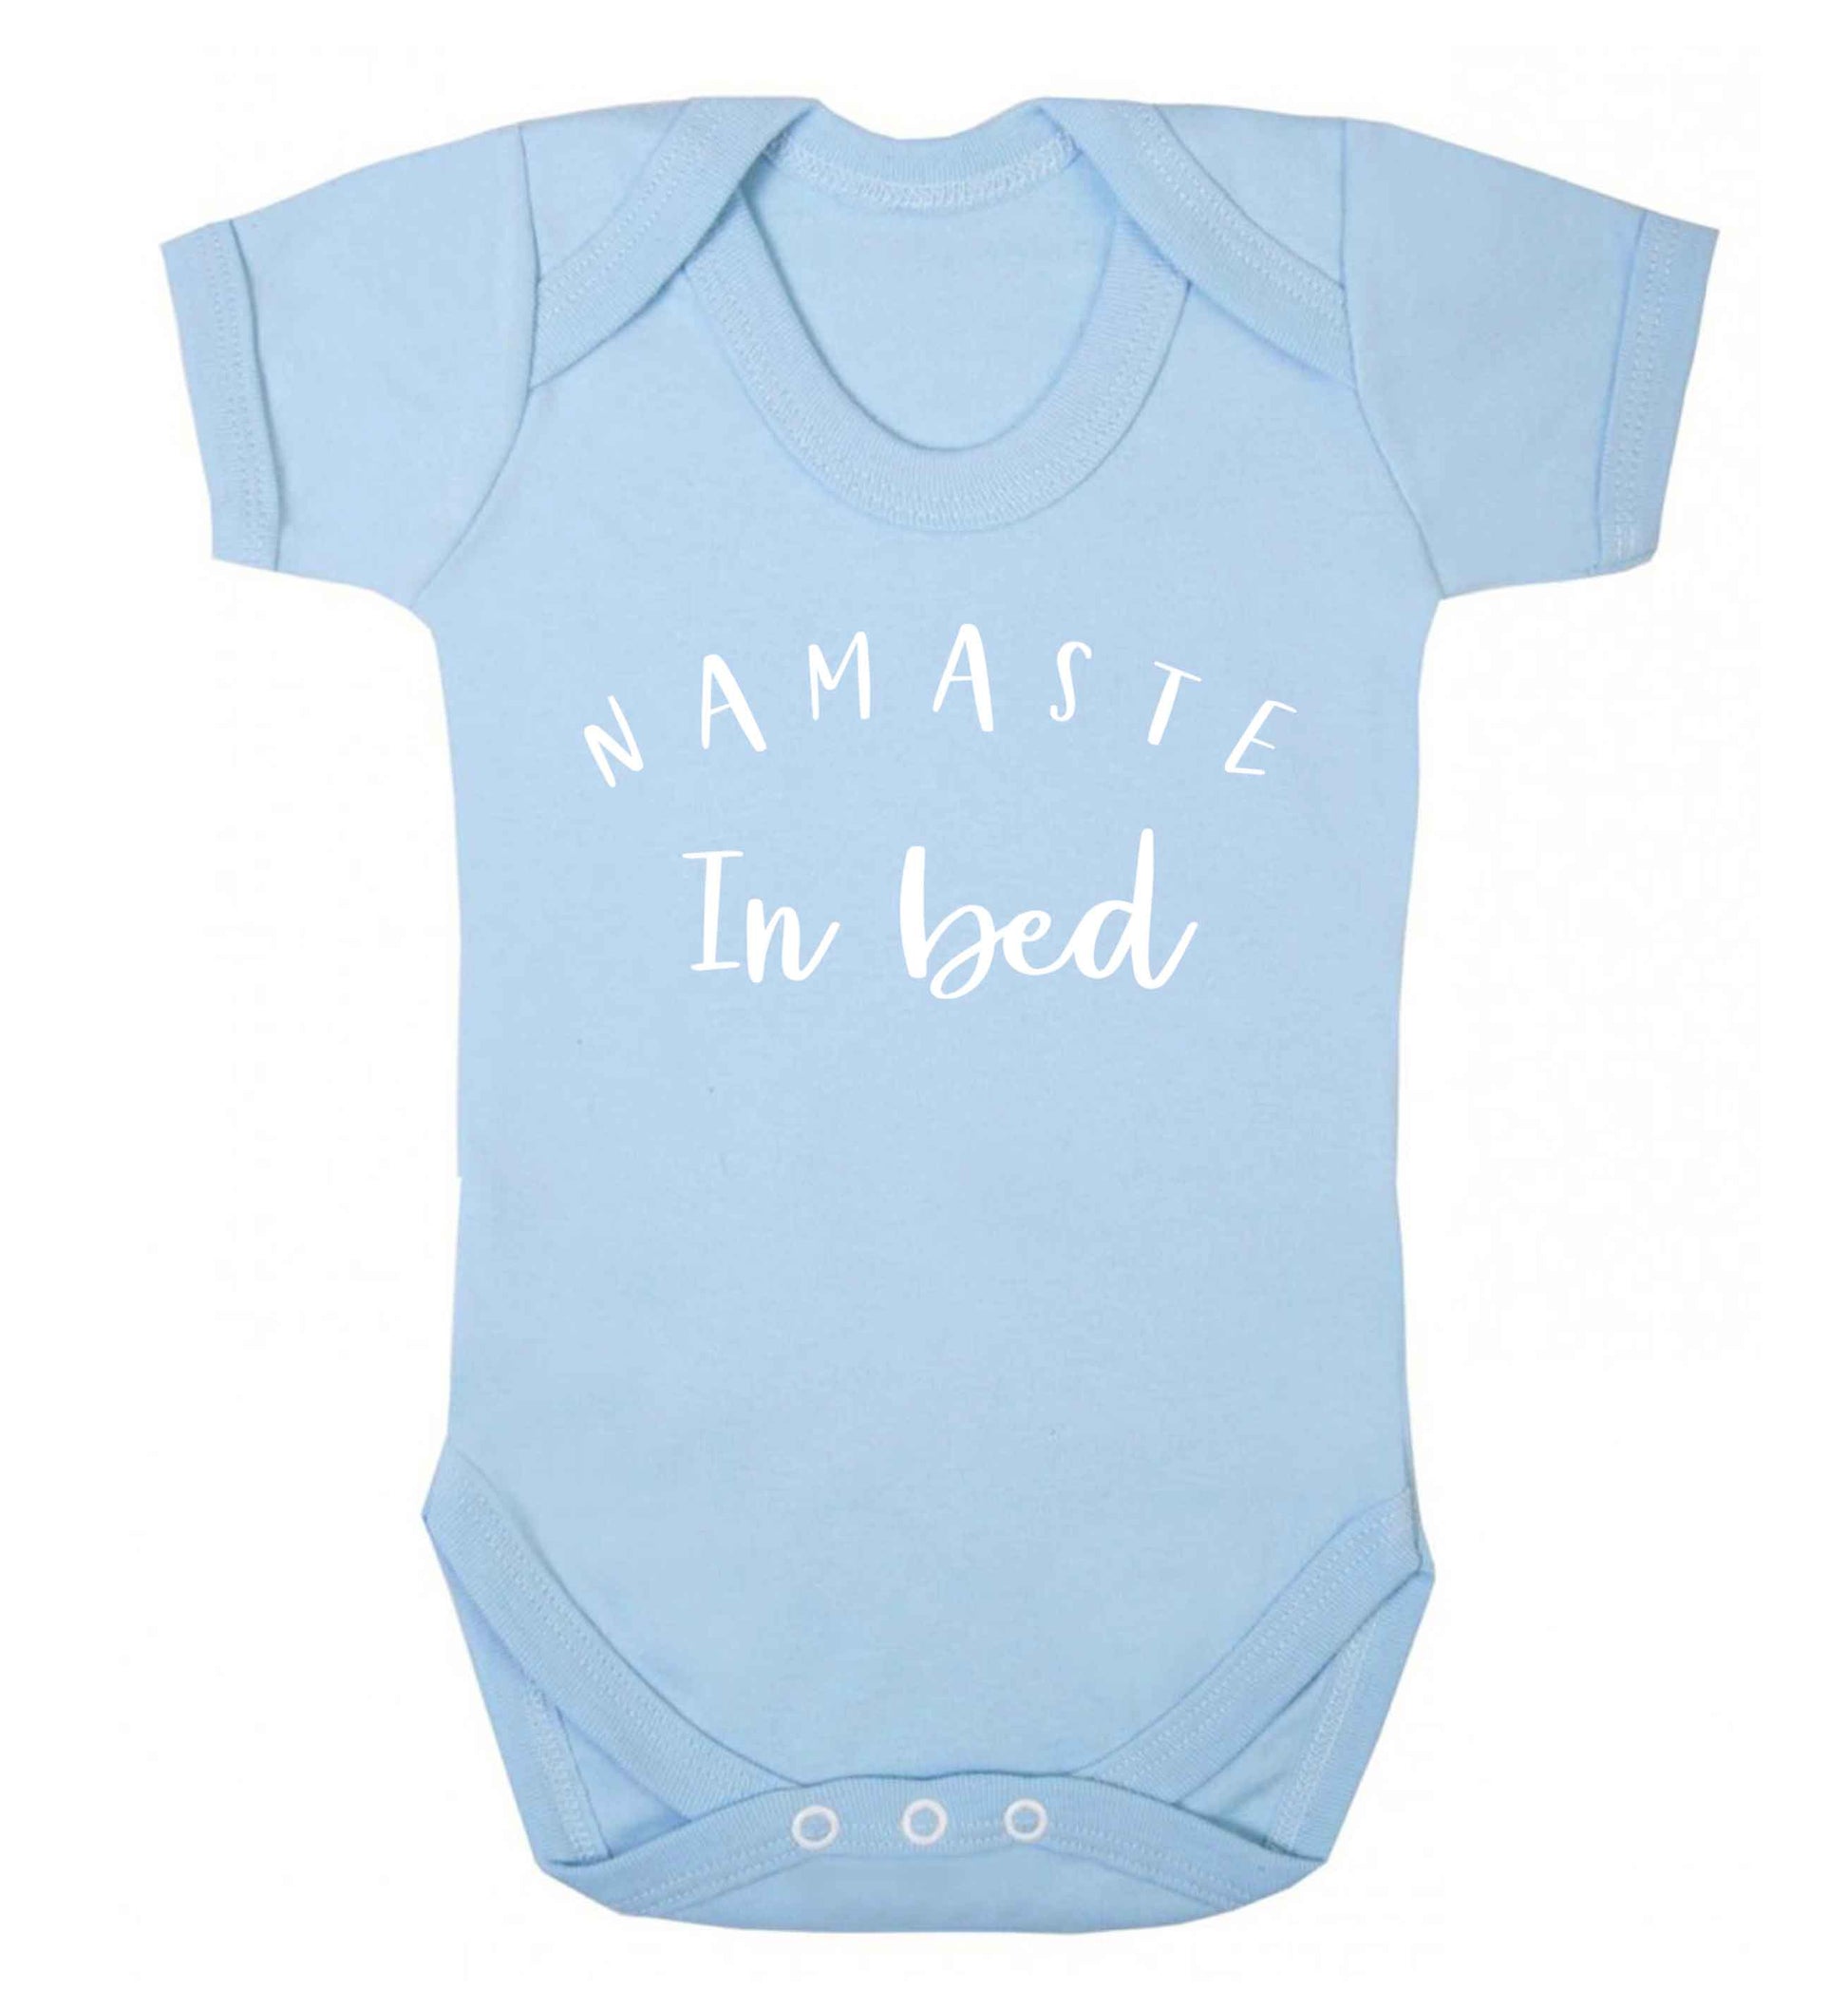 Namaste in bed Baby Vest pale blue 18-24 months